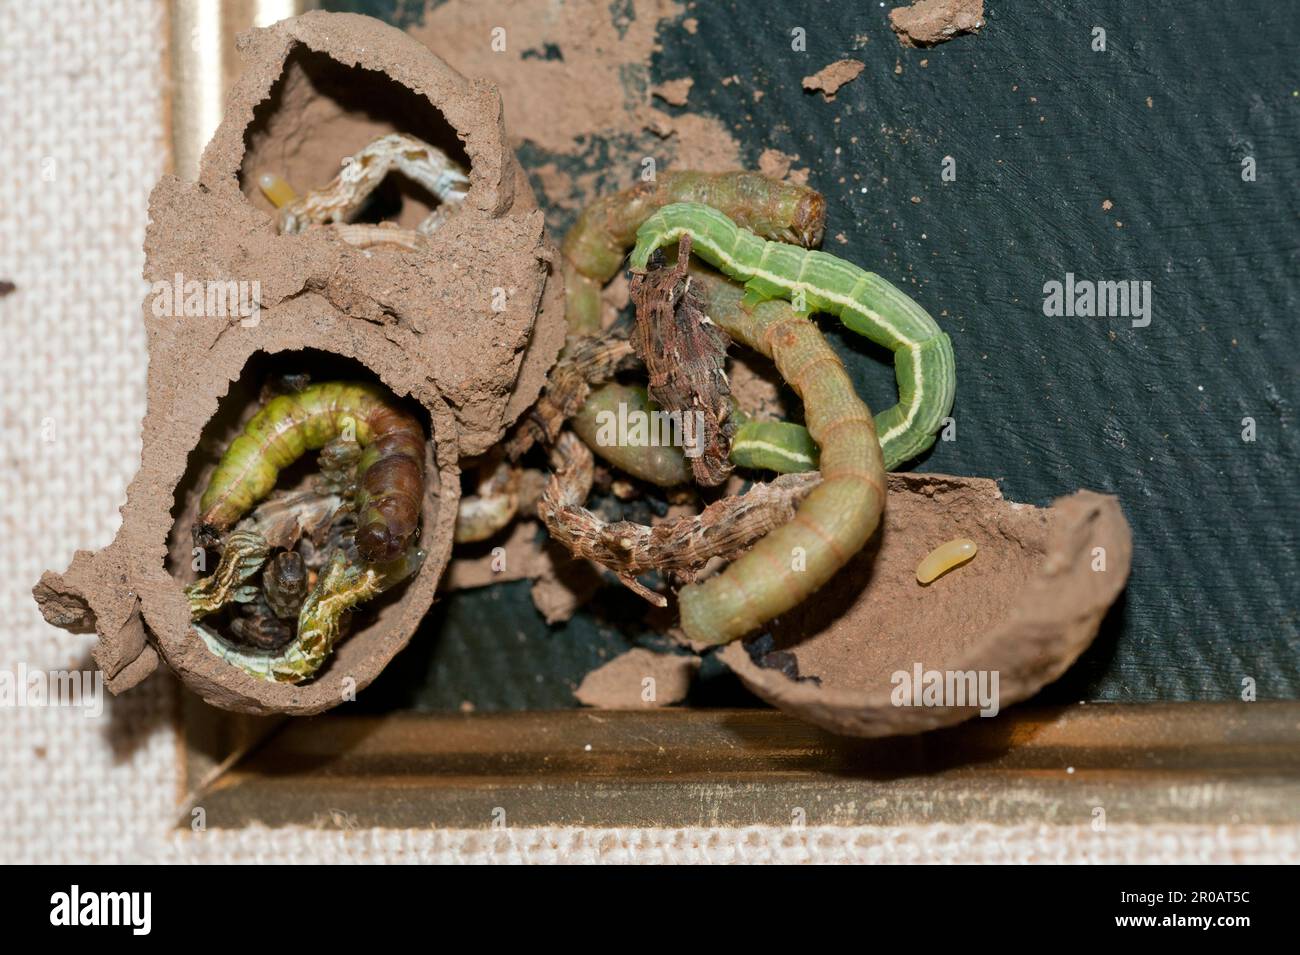 Caterpillars, Lepidoptera Order, food for larvae inside broken Mud Dauber Wasp, Crabronidae Family, clay nest, Klungkung, Bali, Indonesia Stock Photo